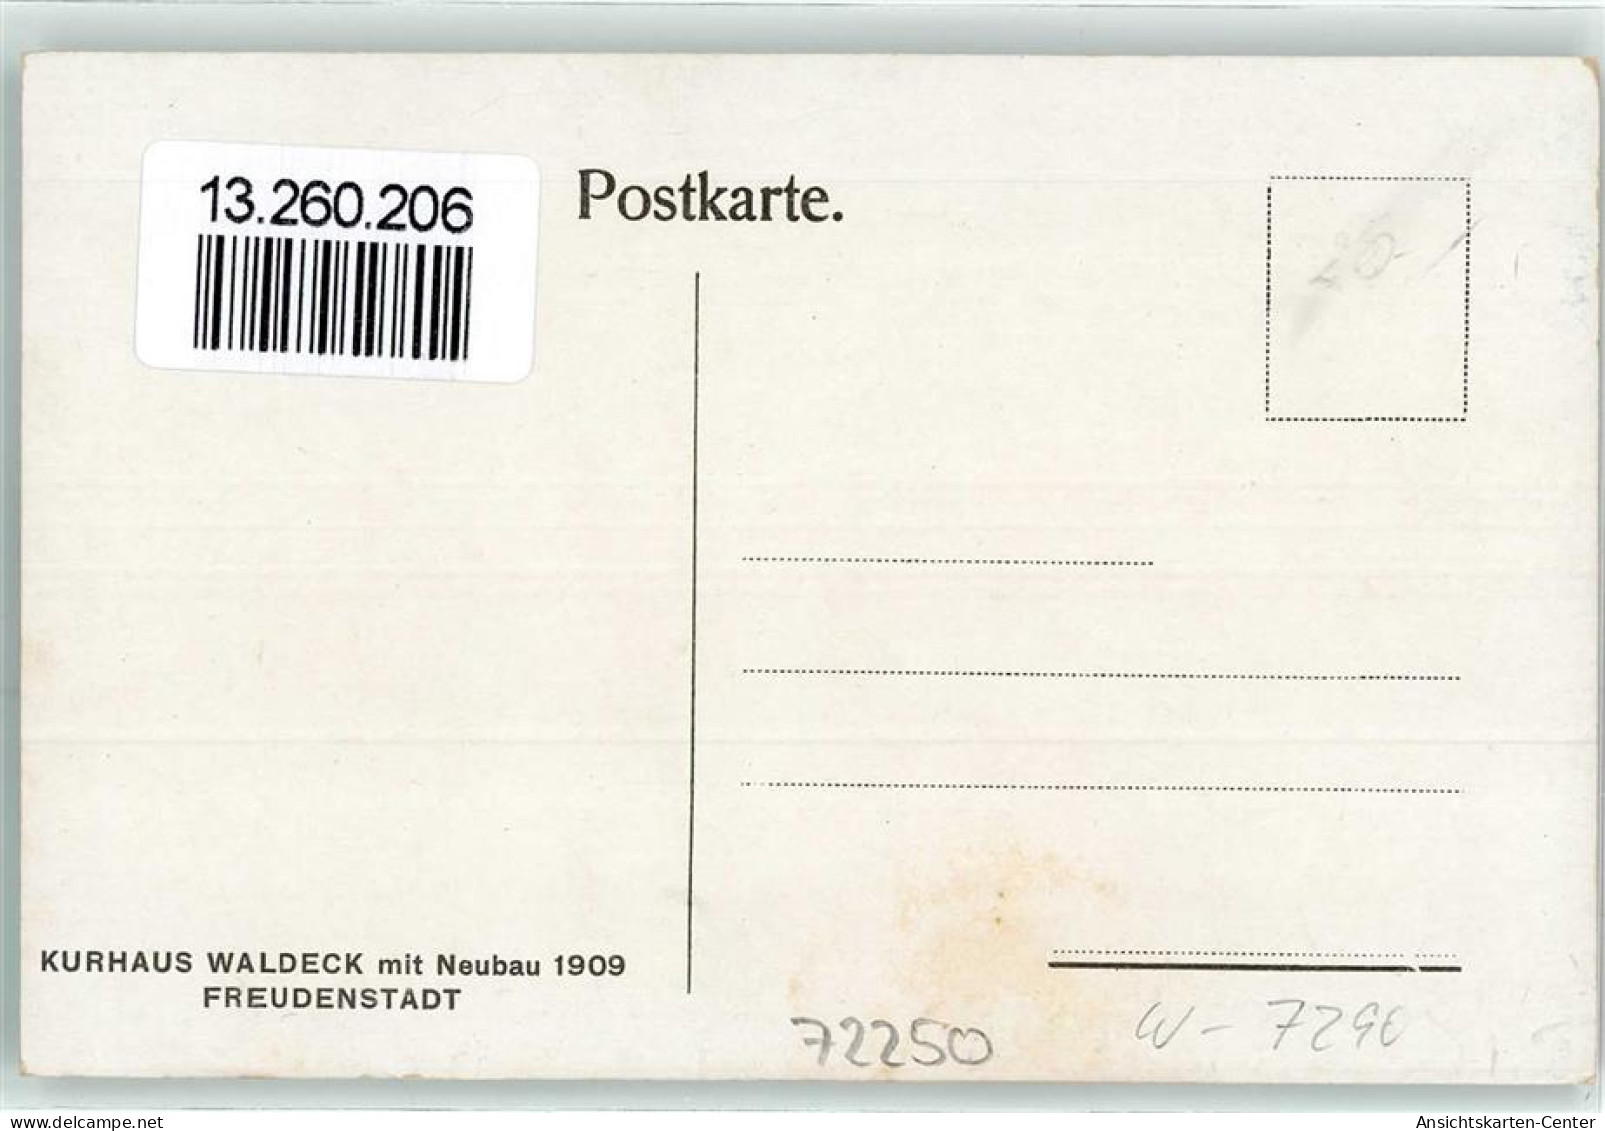 13260206 - Freudenstadt - Freudenstadt